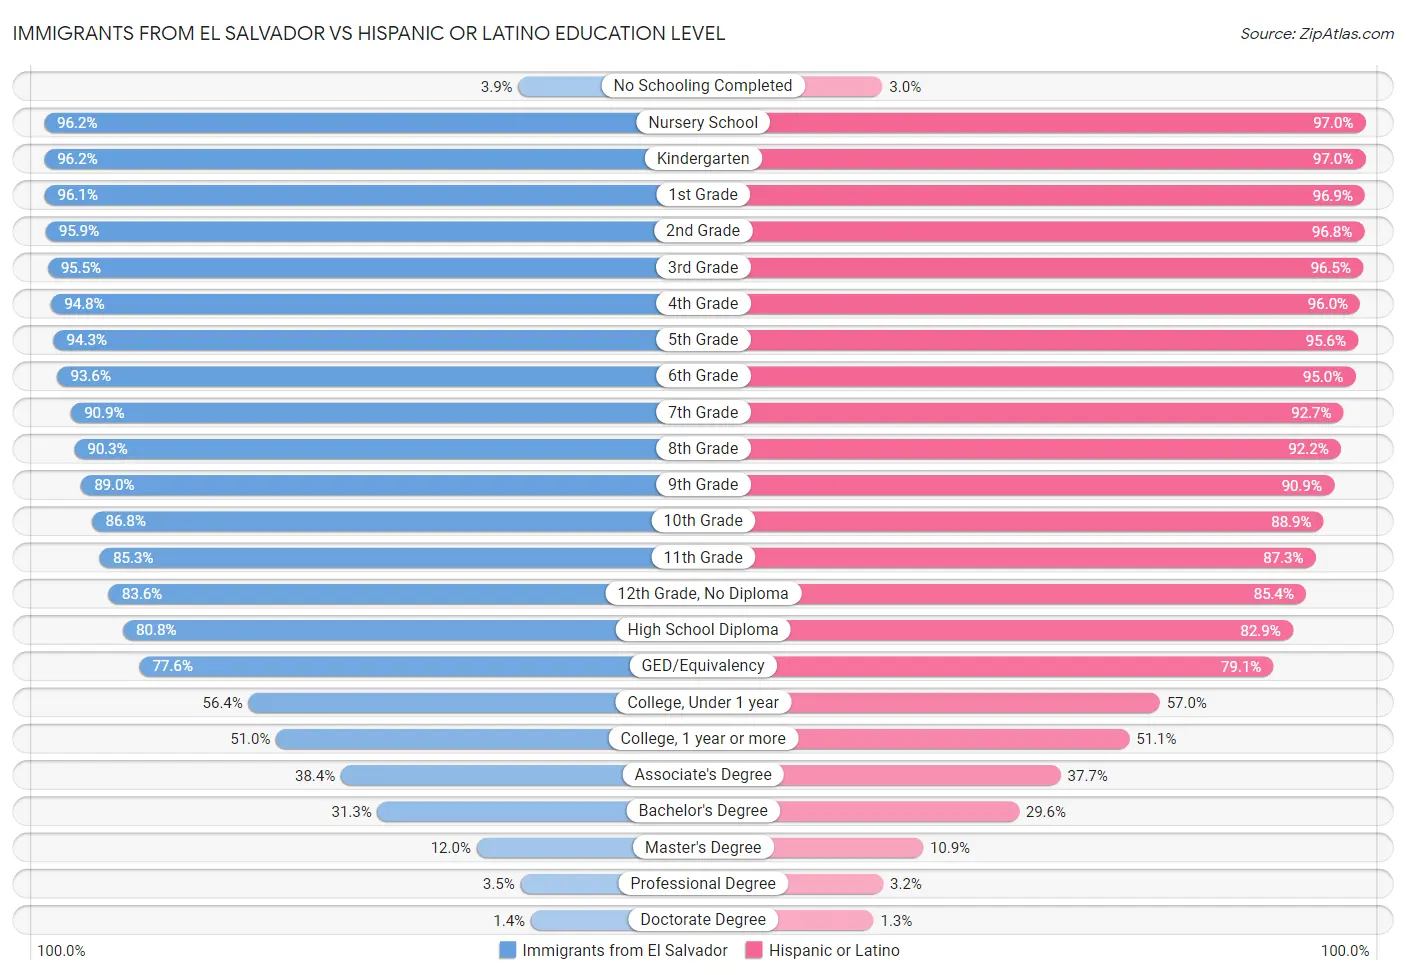 Immigrants from El Salvador vs Hispanic or Latino Education Level